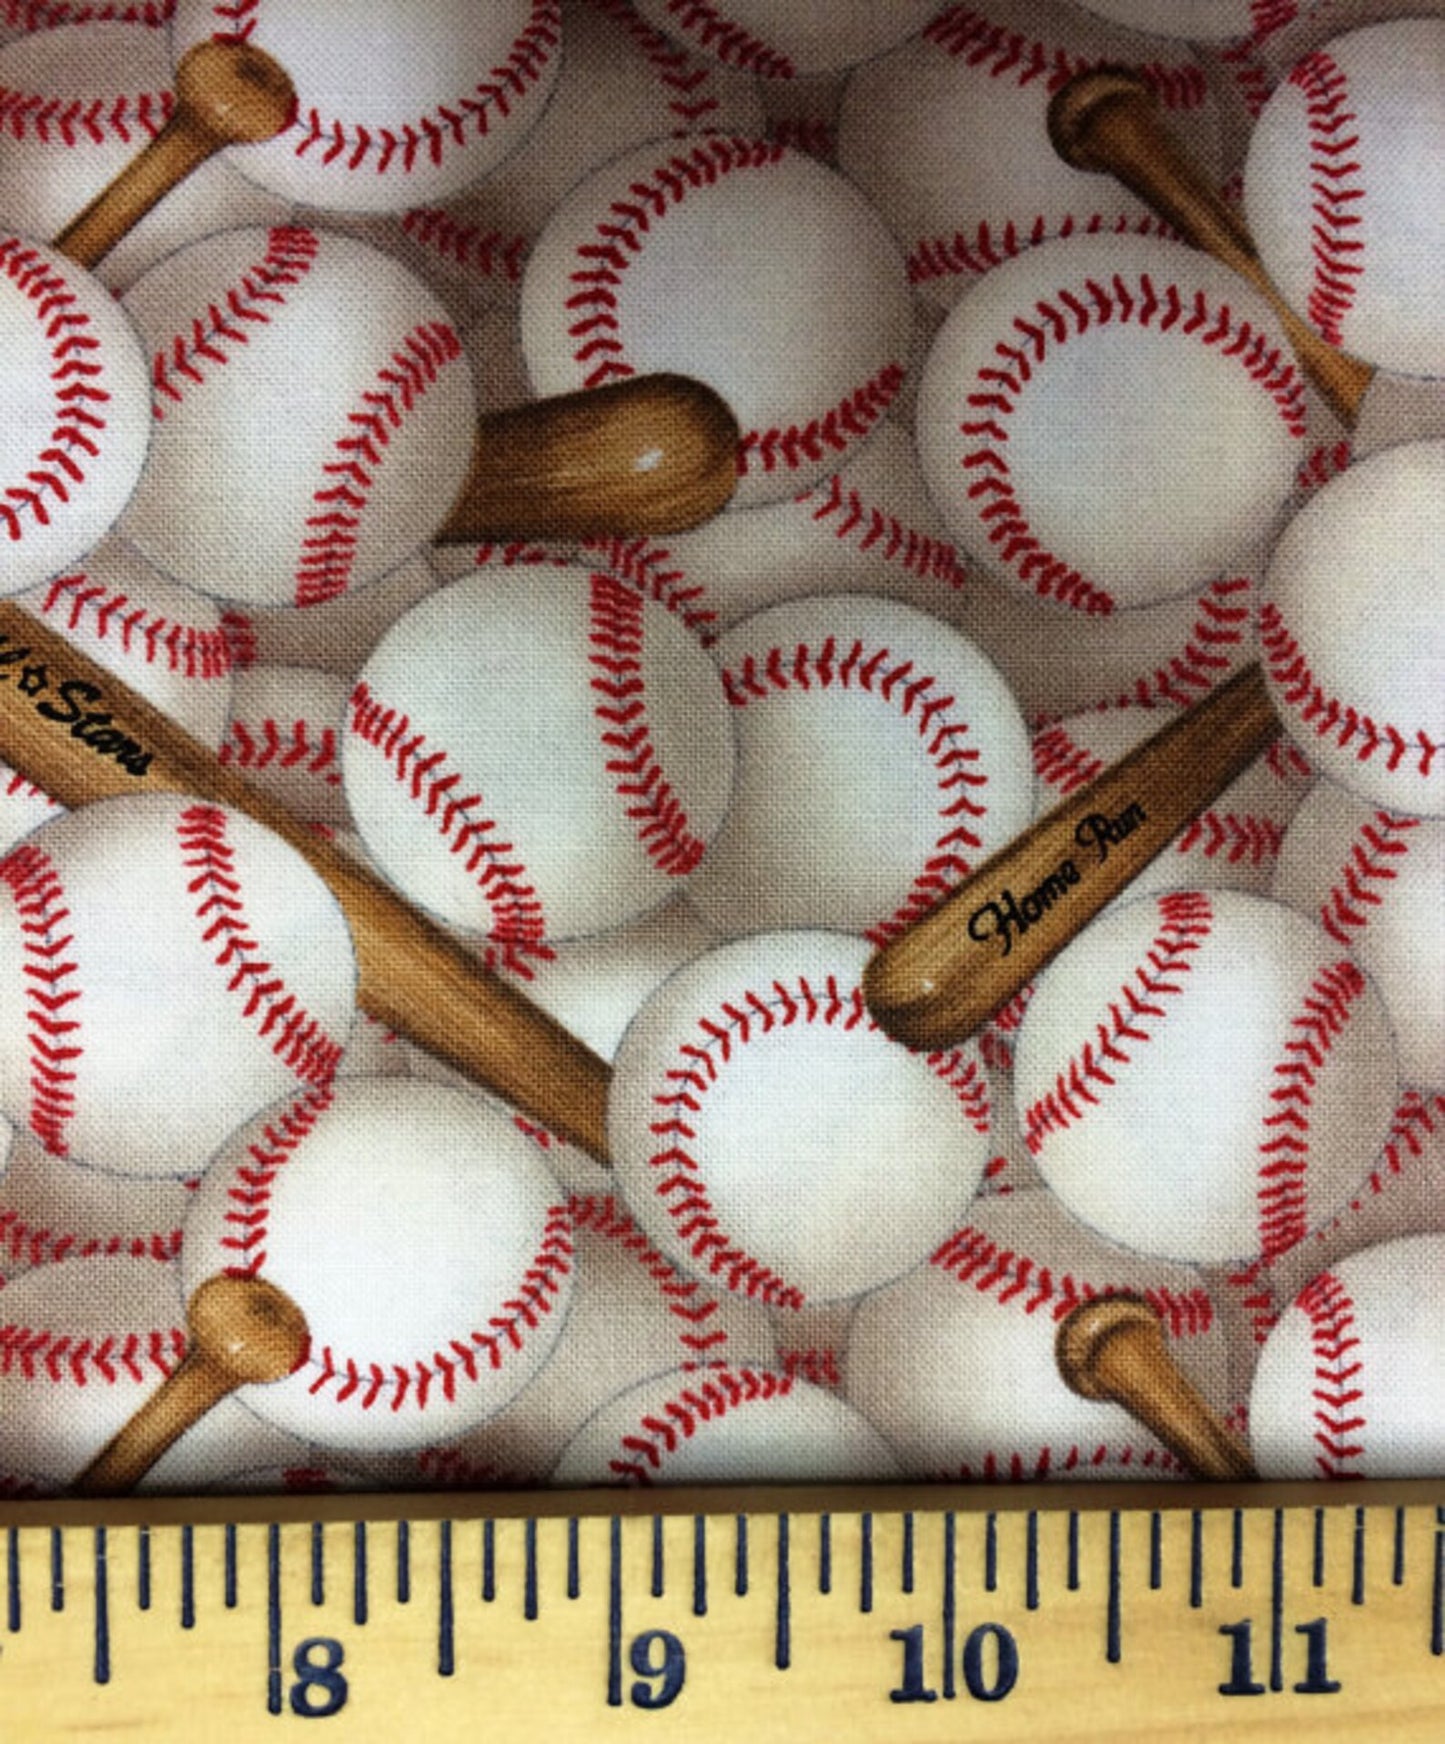 Baseball with Bats by Elizabeth's Studio